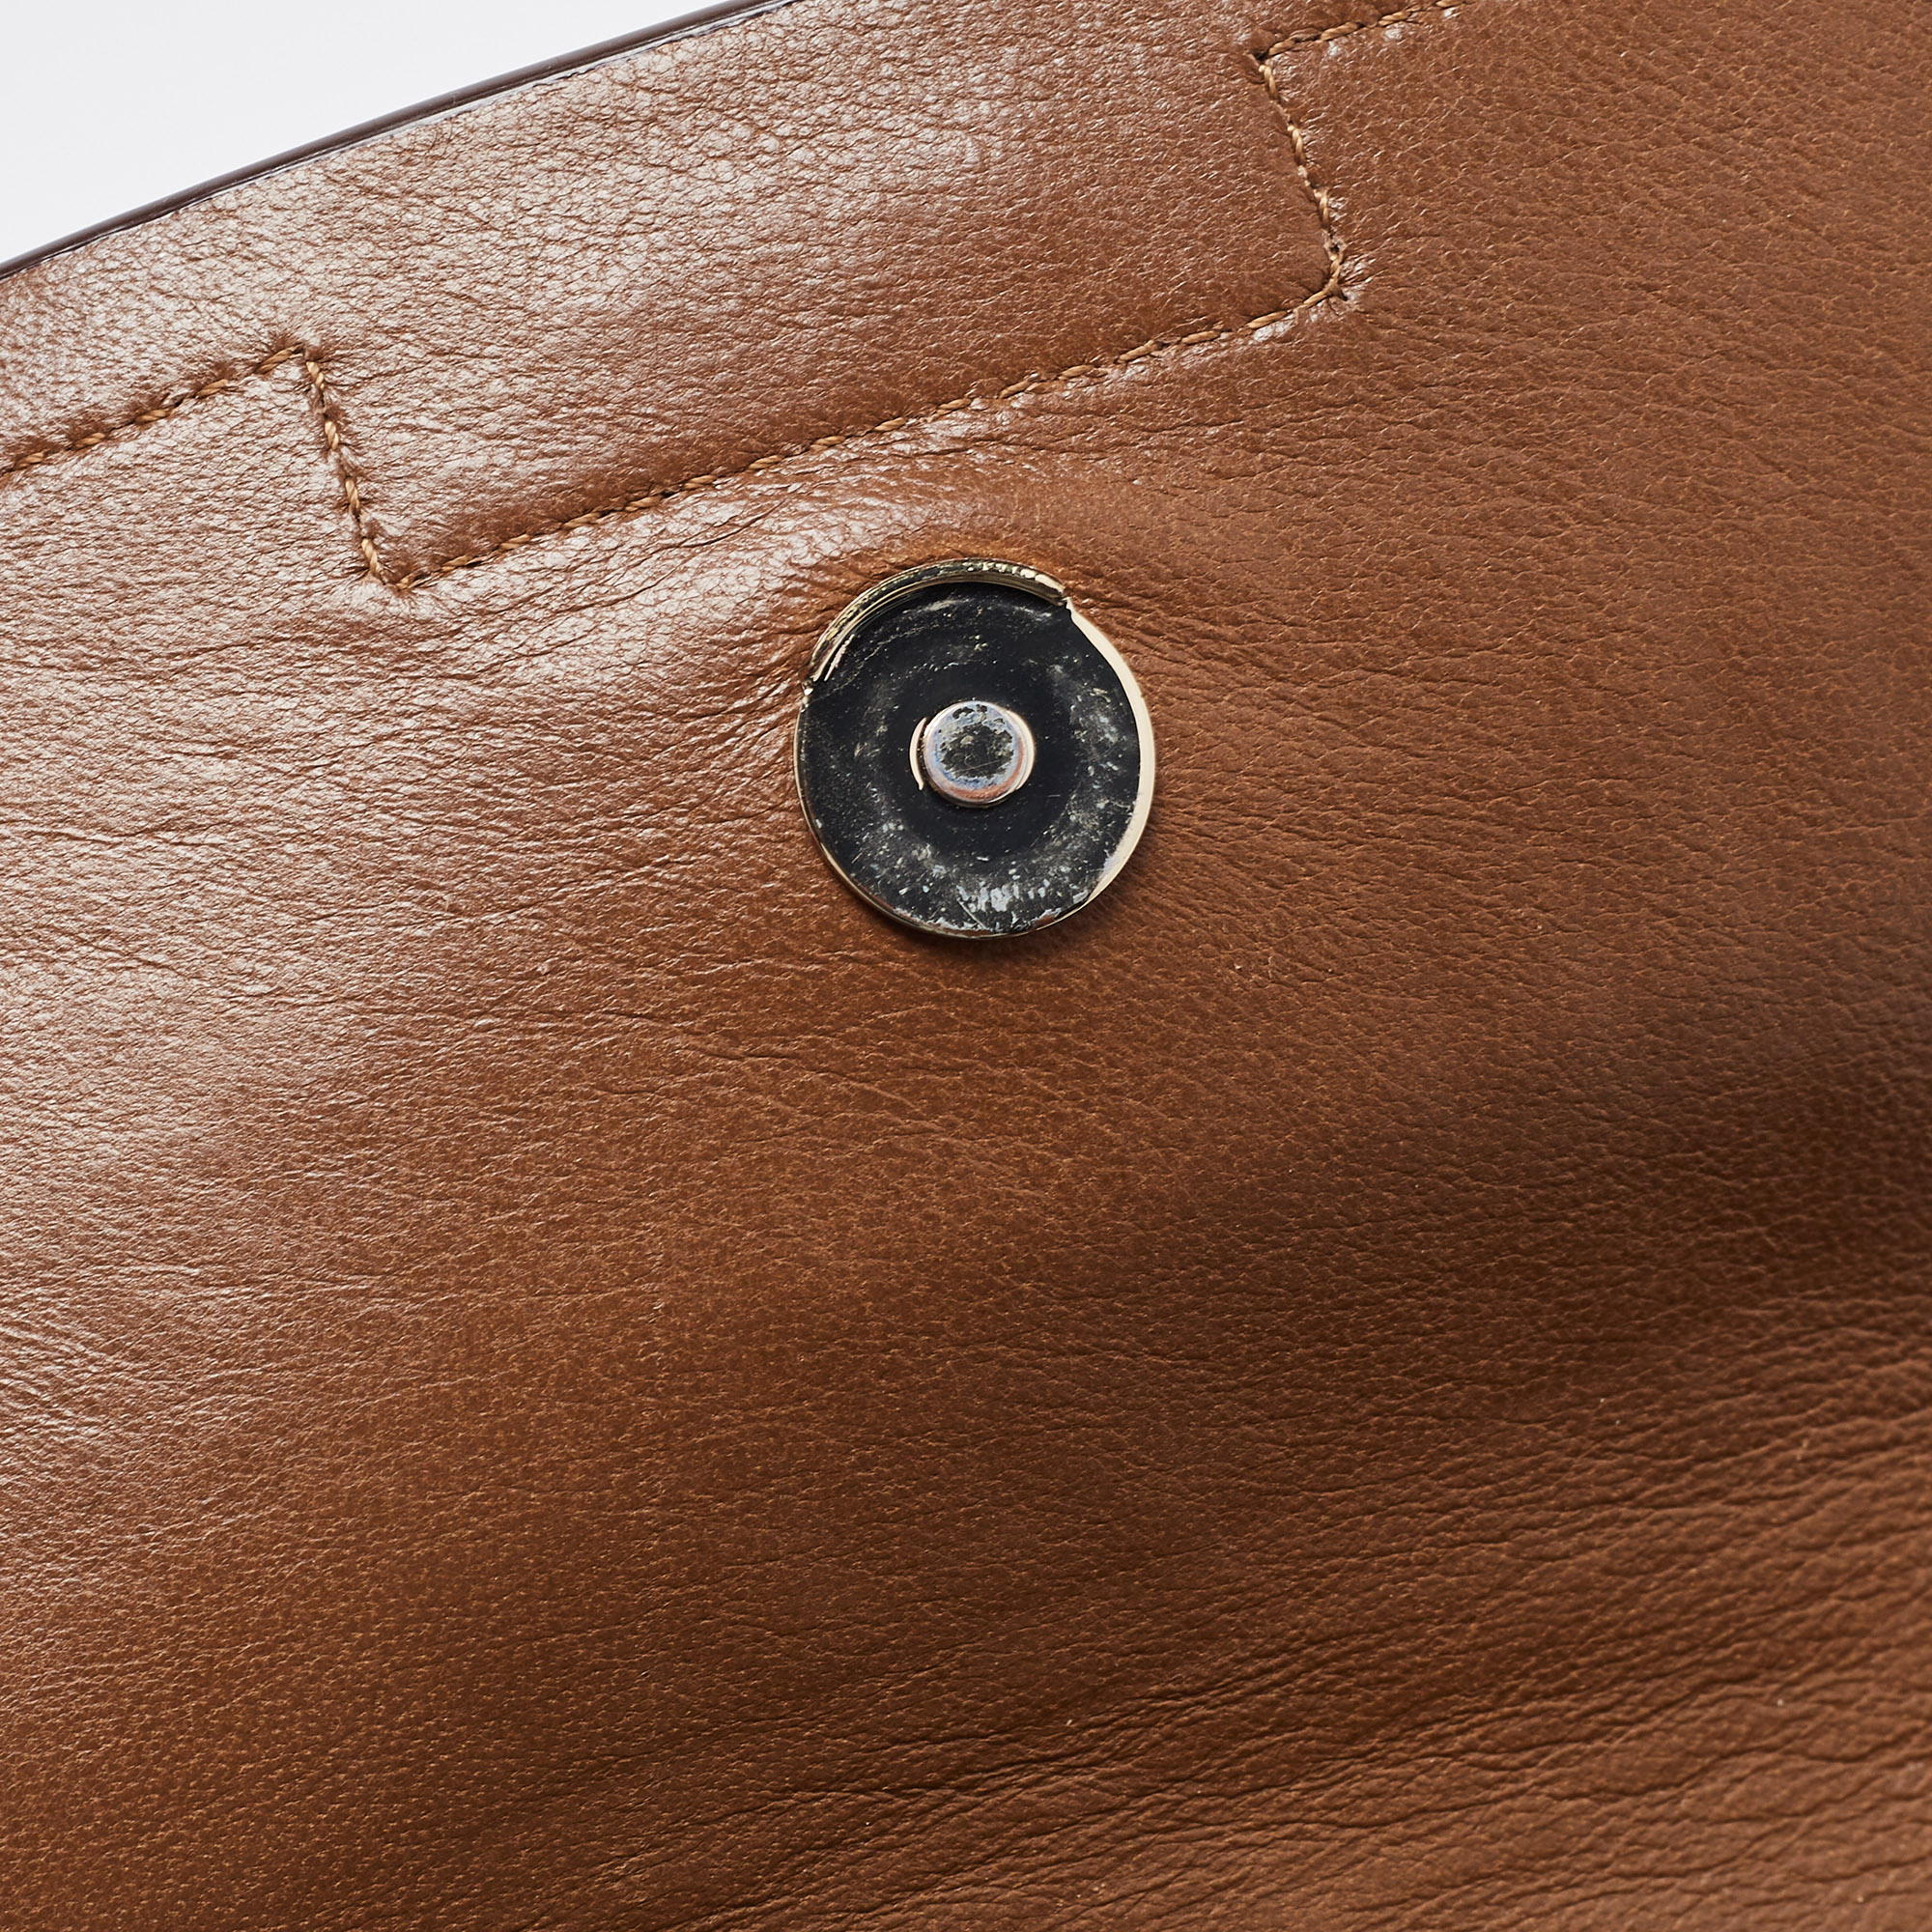 DKNY Brown Pinstripe Quilted Leather Gansevoort Flap Shoulder Bag